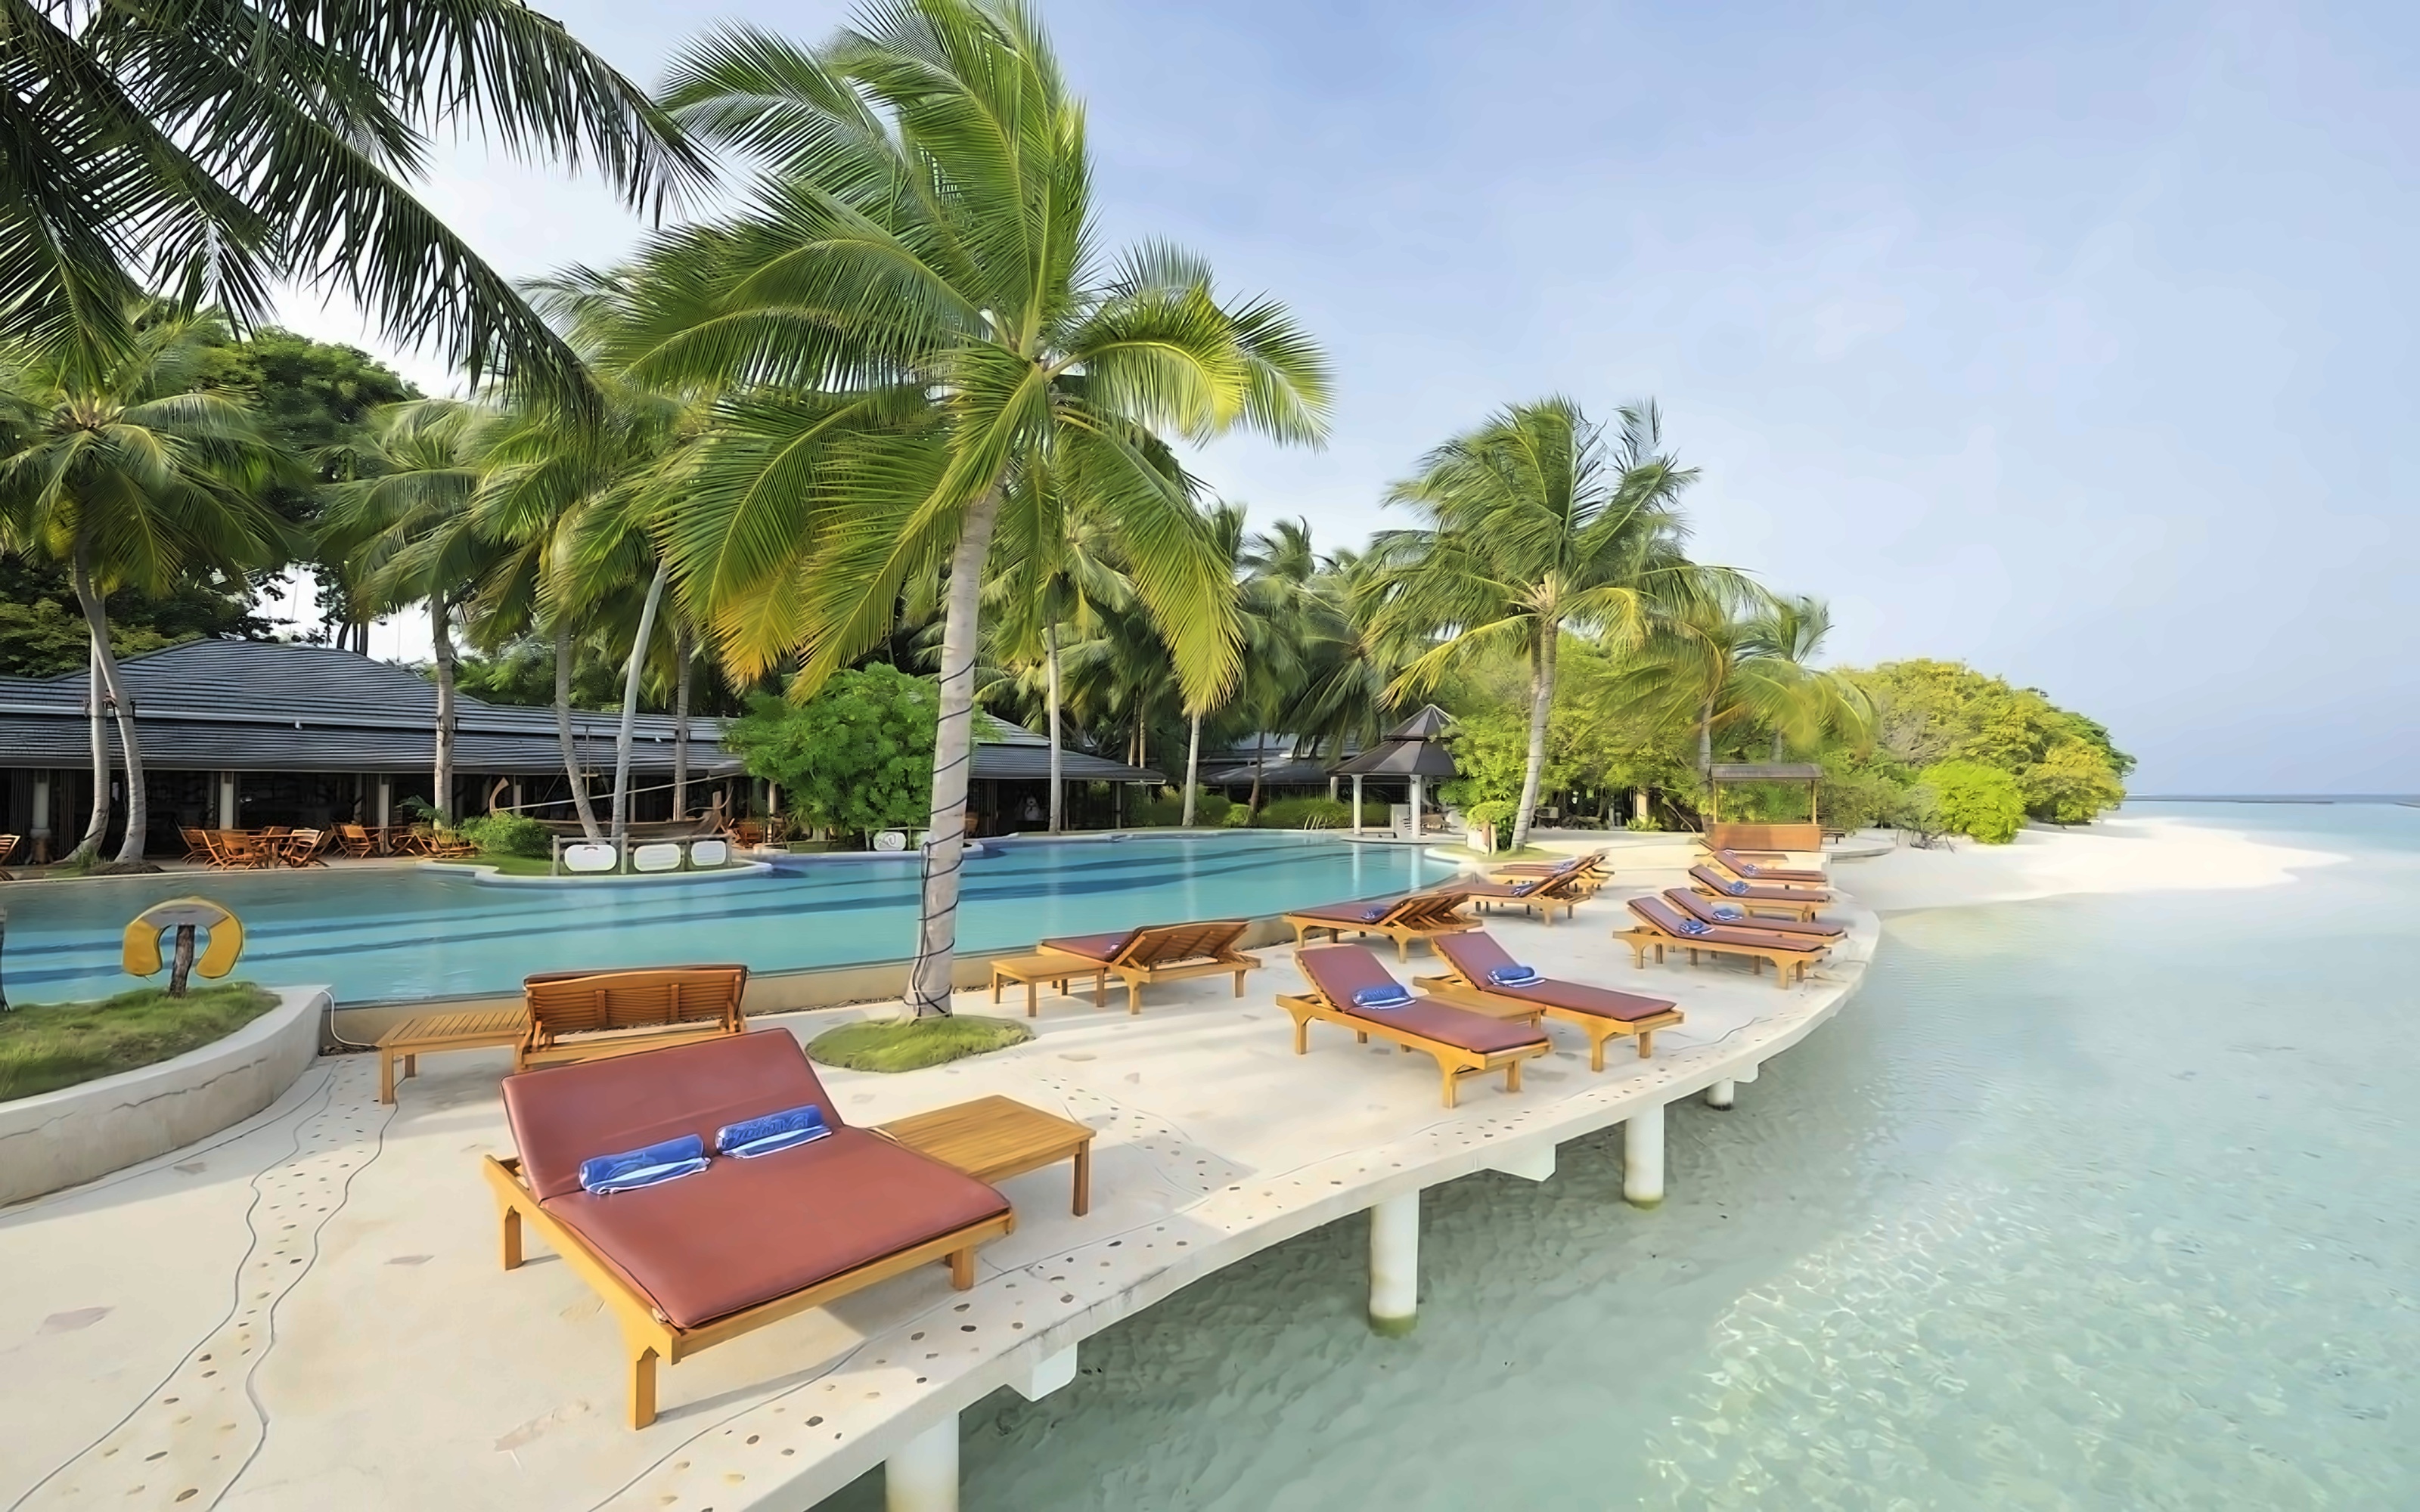 Royal island spa 5. Royal Island Resort & Spa 5*. Отель Роял Айленд Мальдивы. Royal Island Resort & Spa 5* (Баа Атолл). Royal Island Maldives 5.